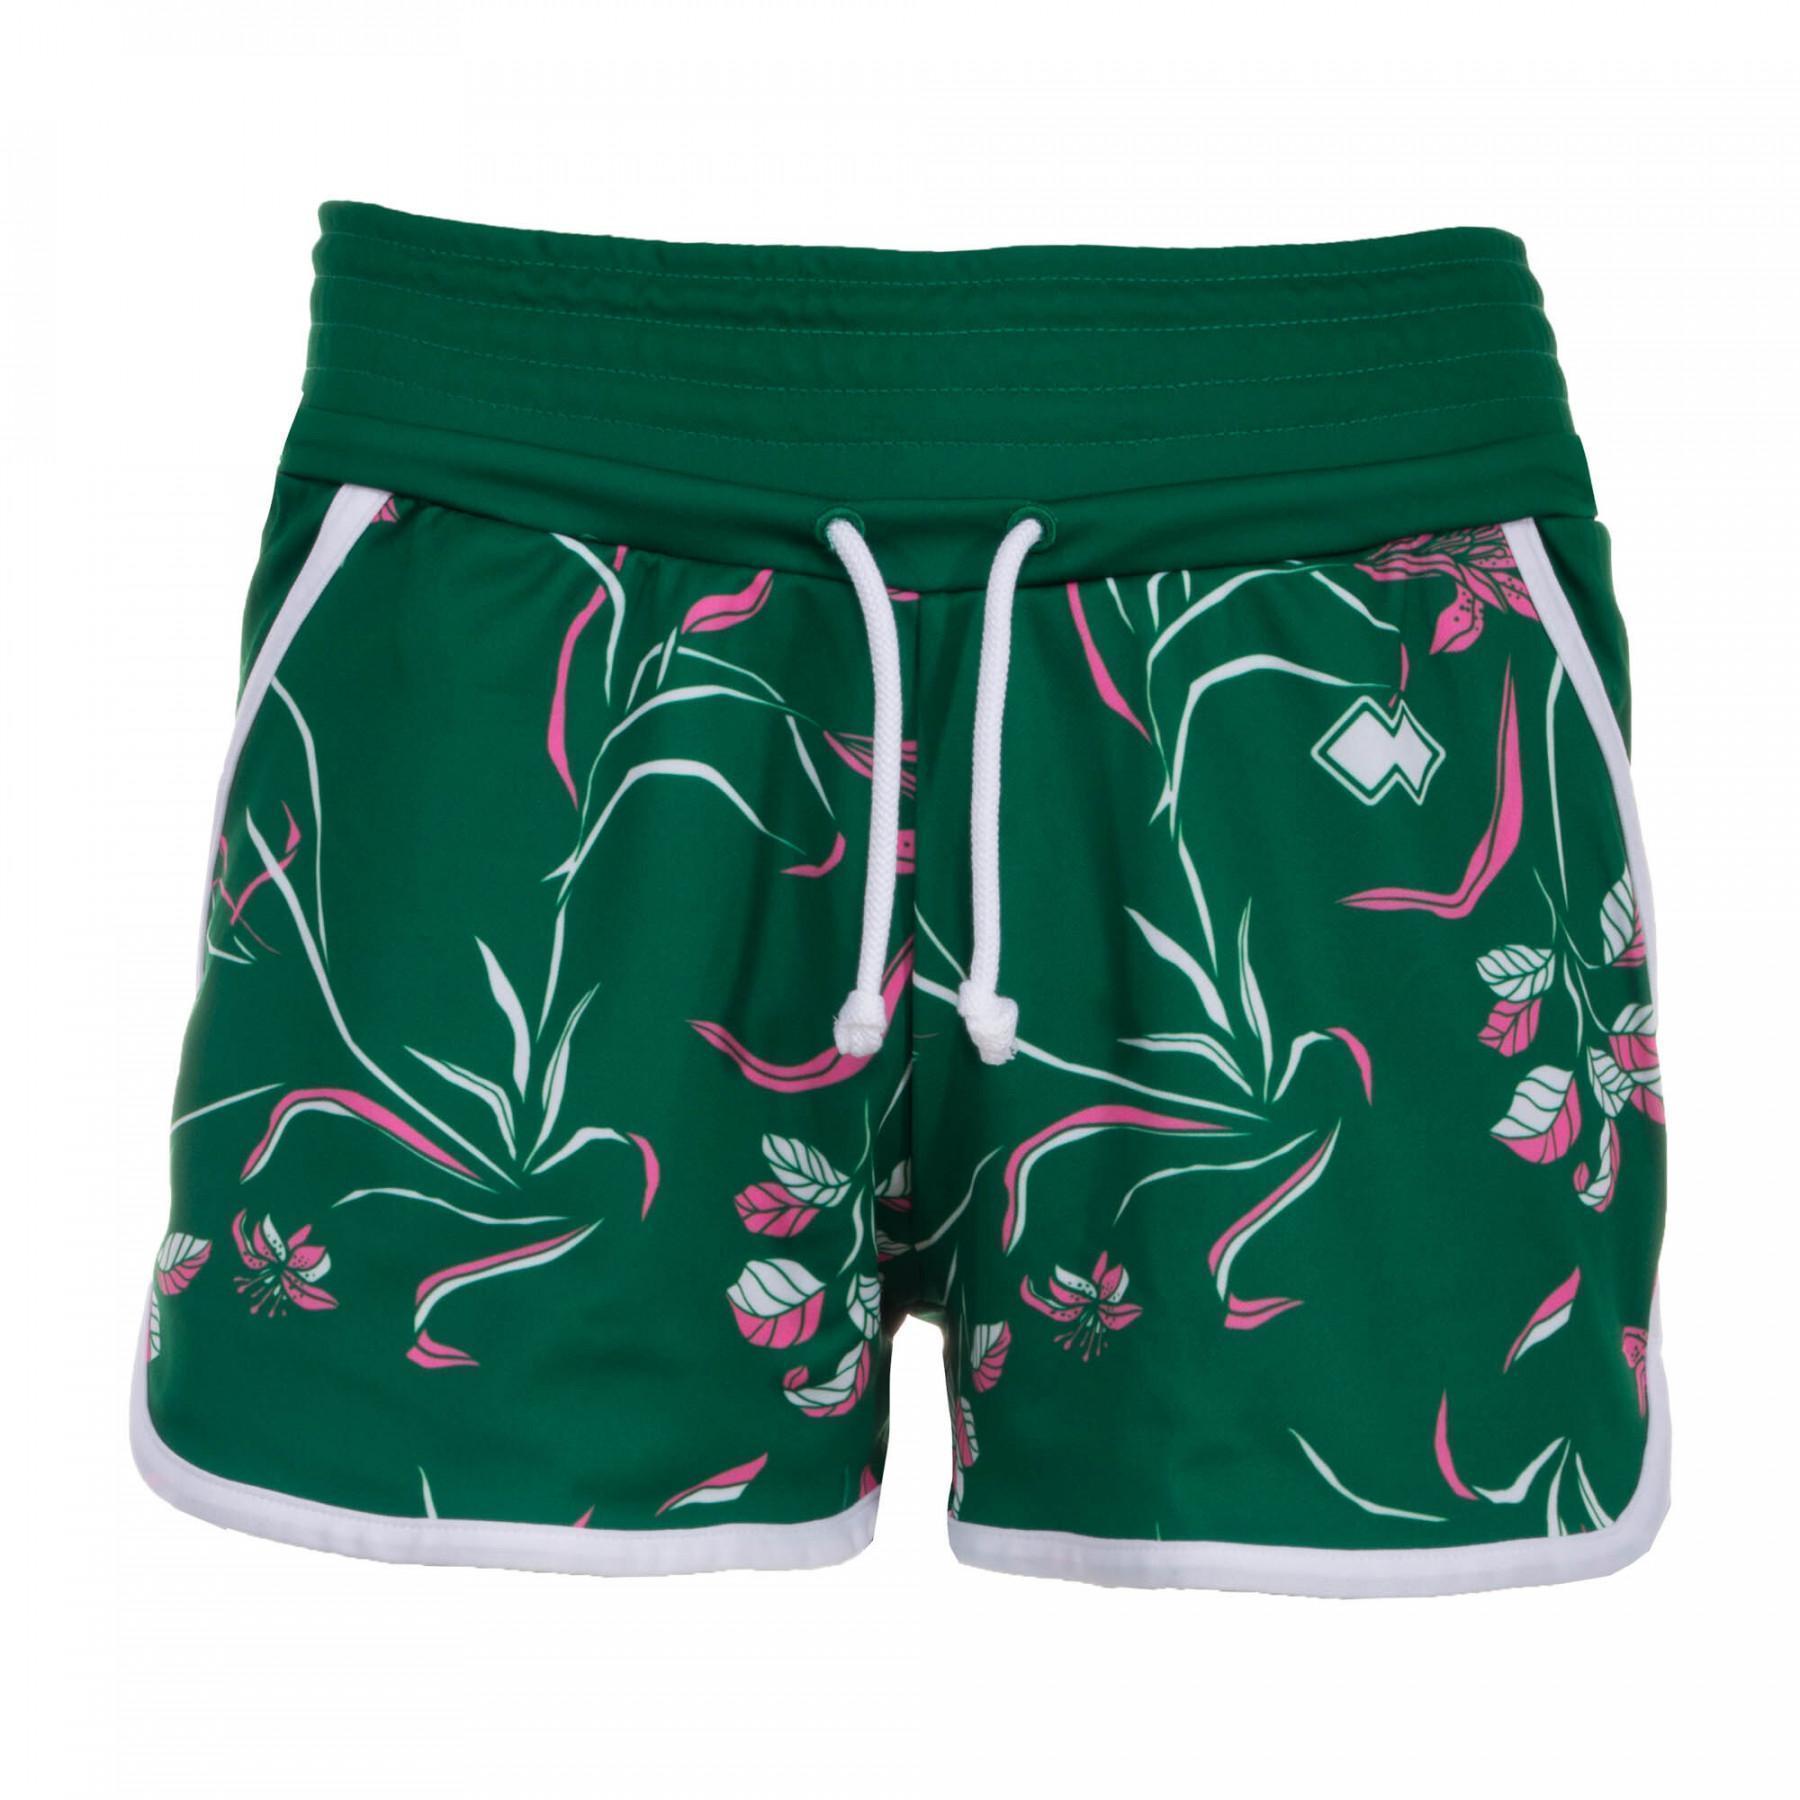 Women's shorts Errea essential fantasy shorts ad boho flowers